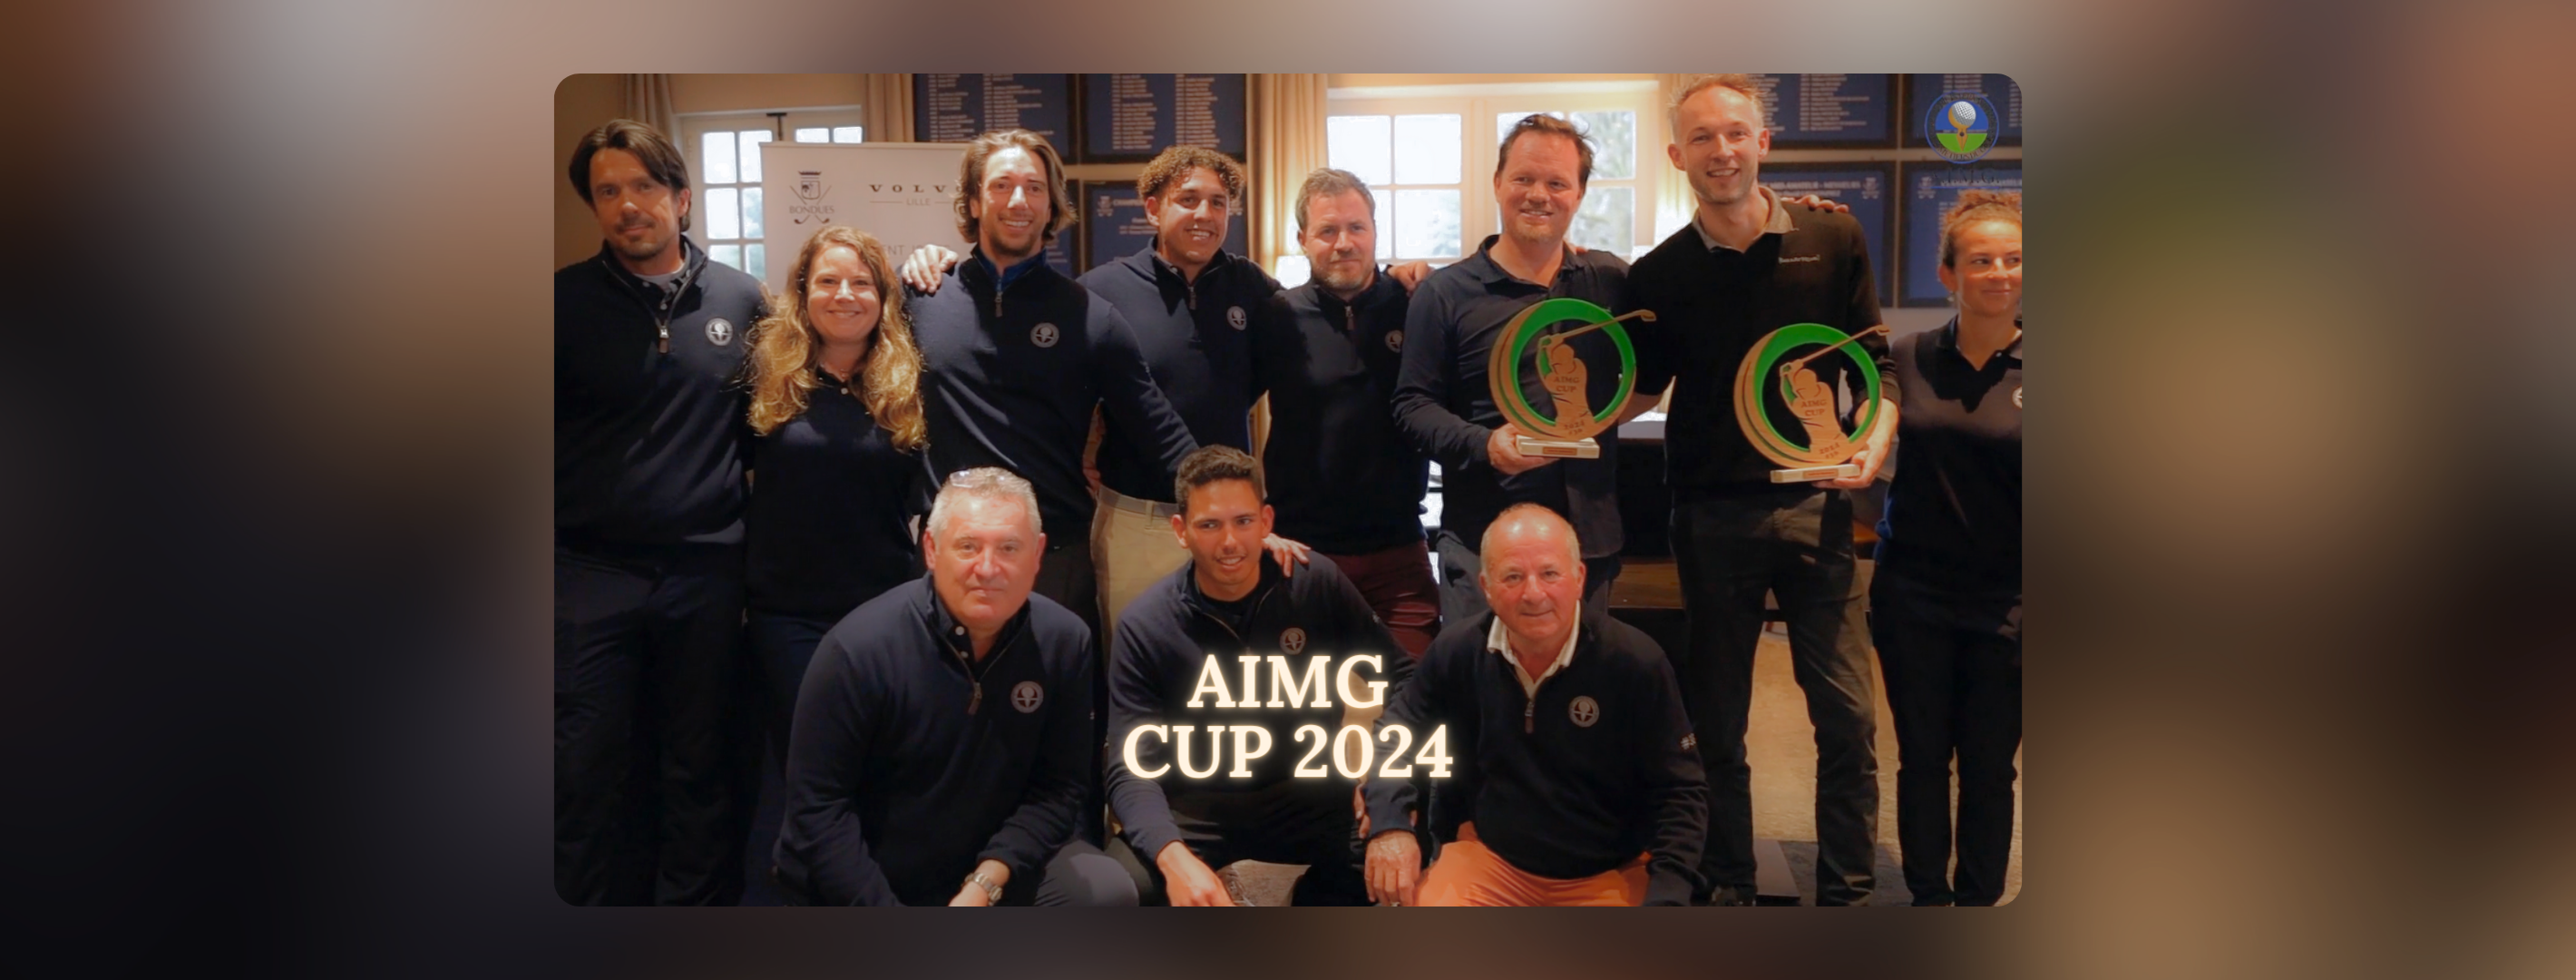 AIMG CUP 2024